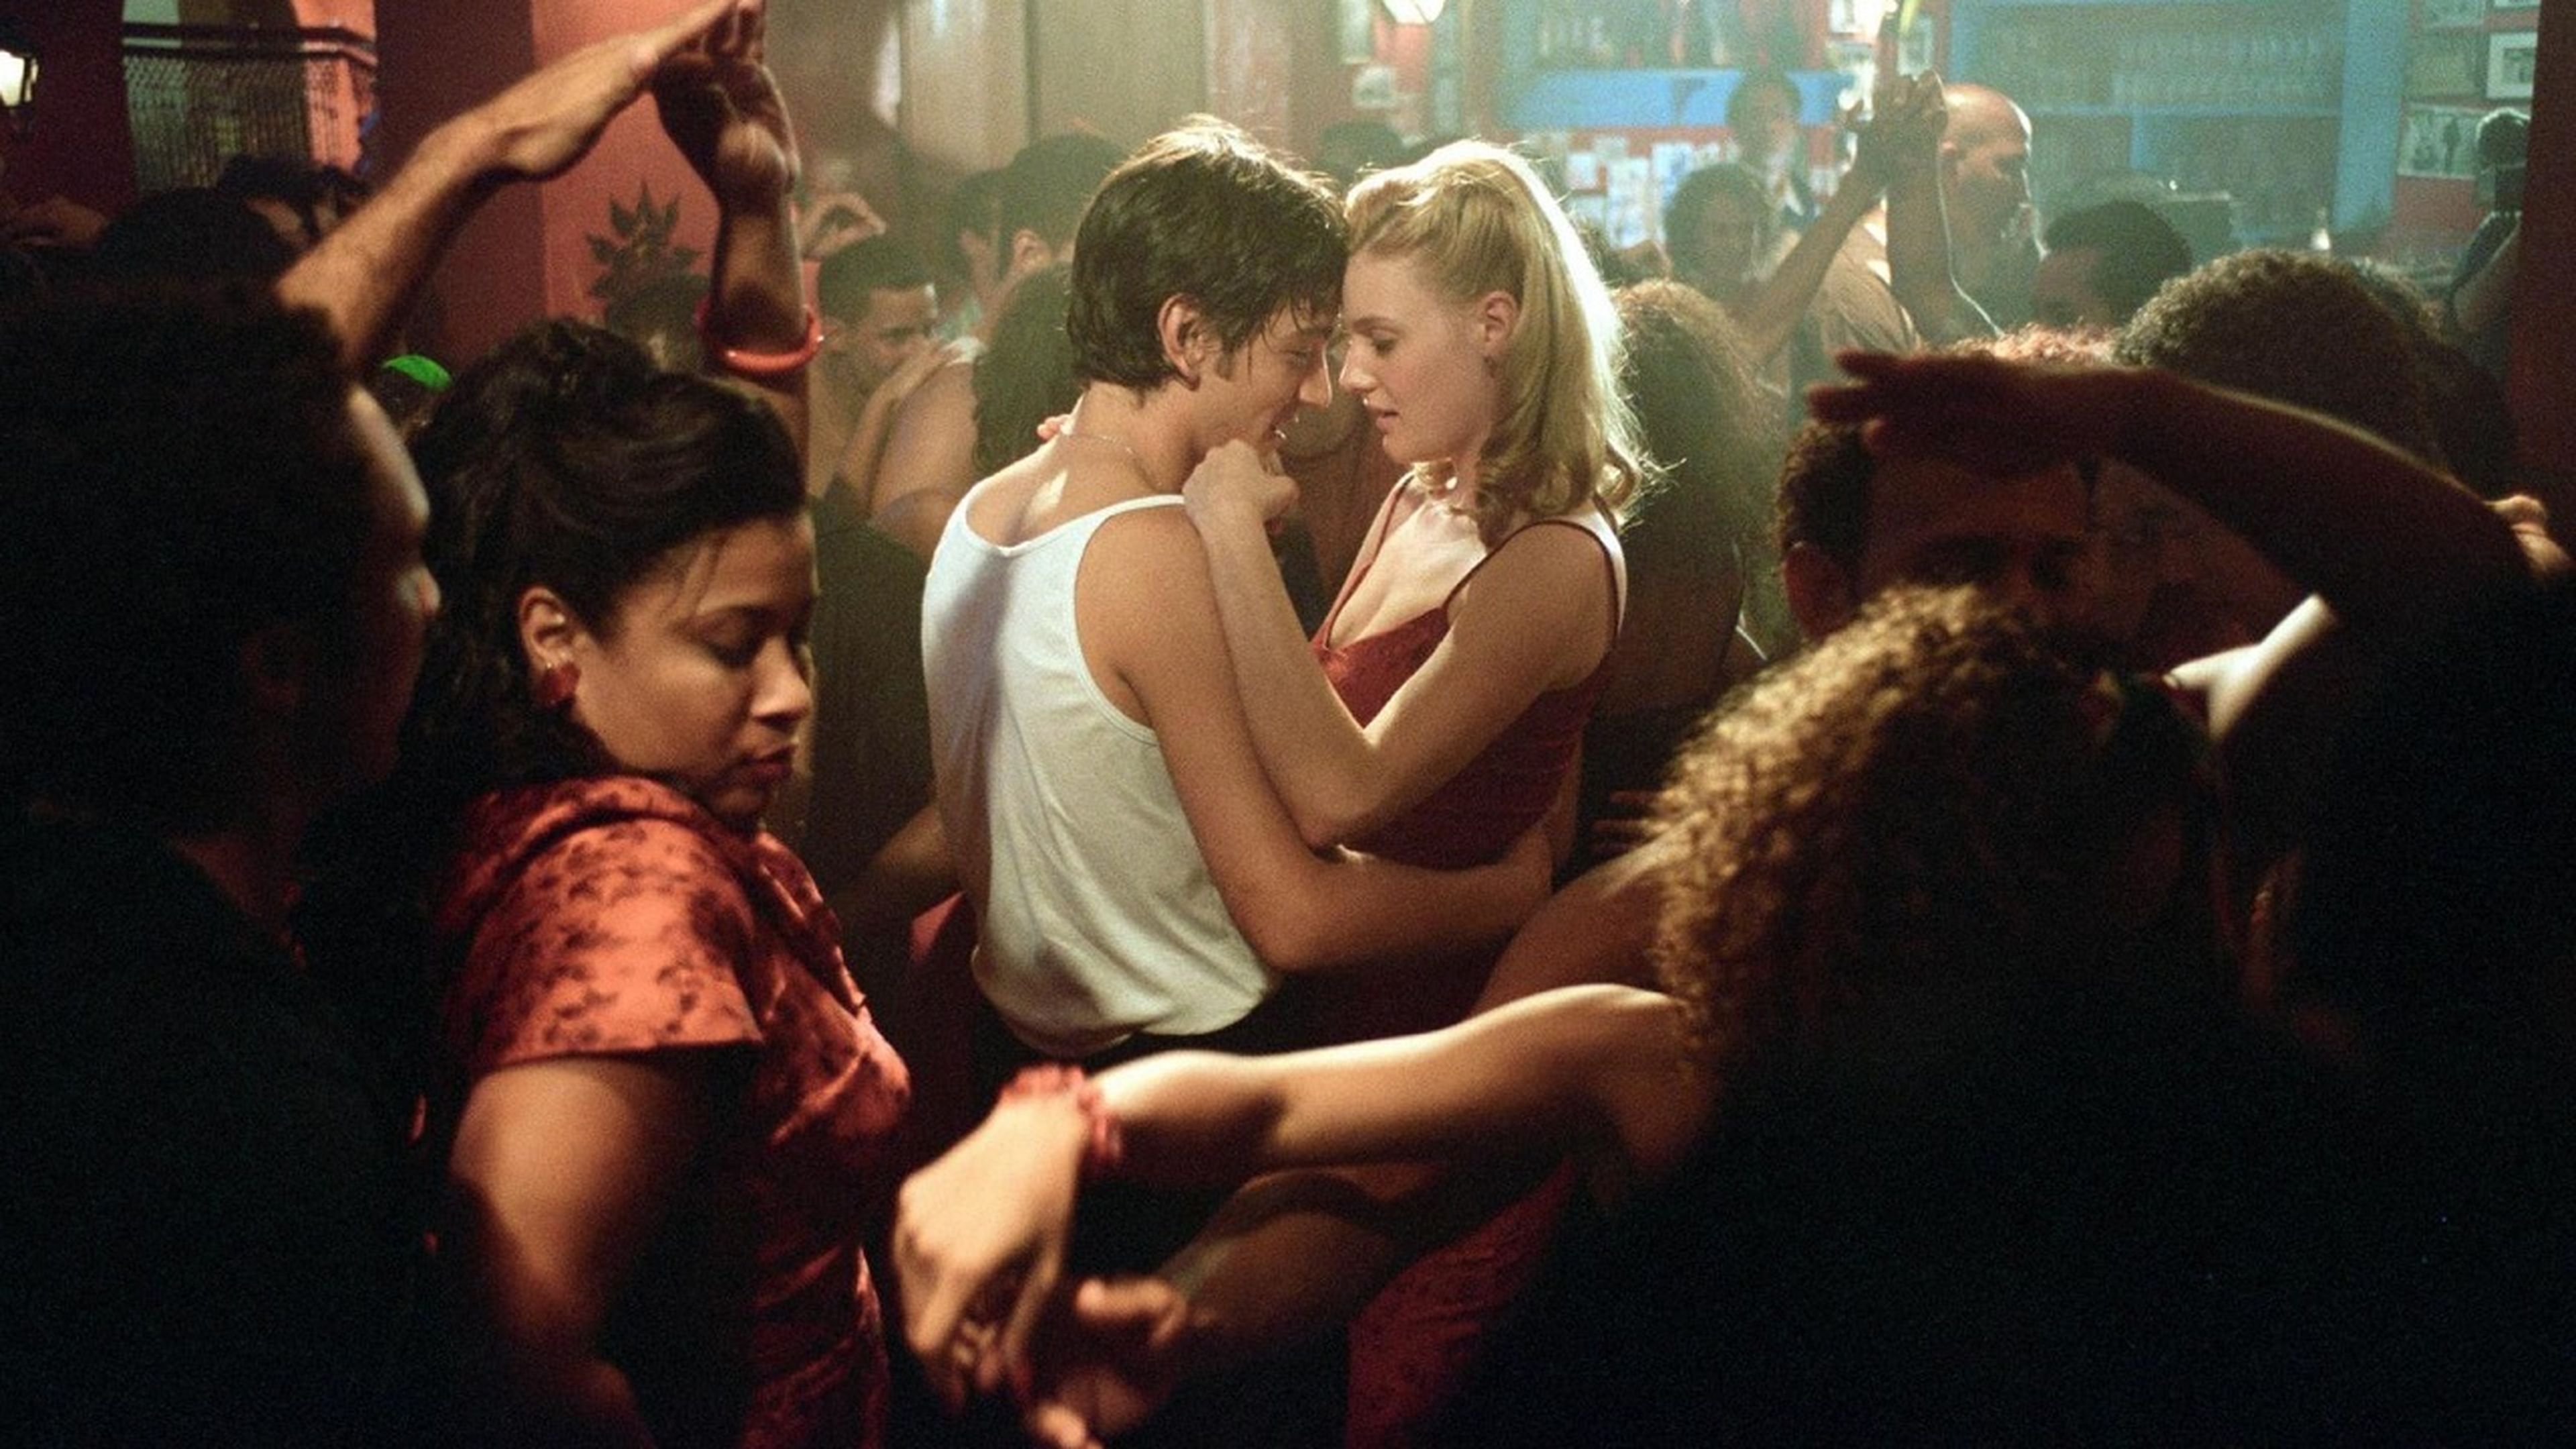 Loves night movies. Грязные танцы 2: Гаванские ночи (2004). Грязные танцы 2 Гаванские ночи. Диего Луна грязные танцы.